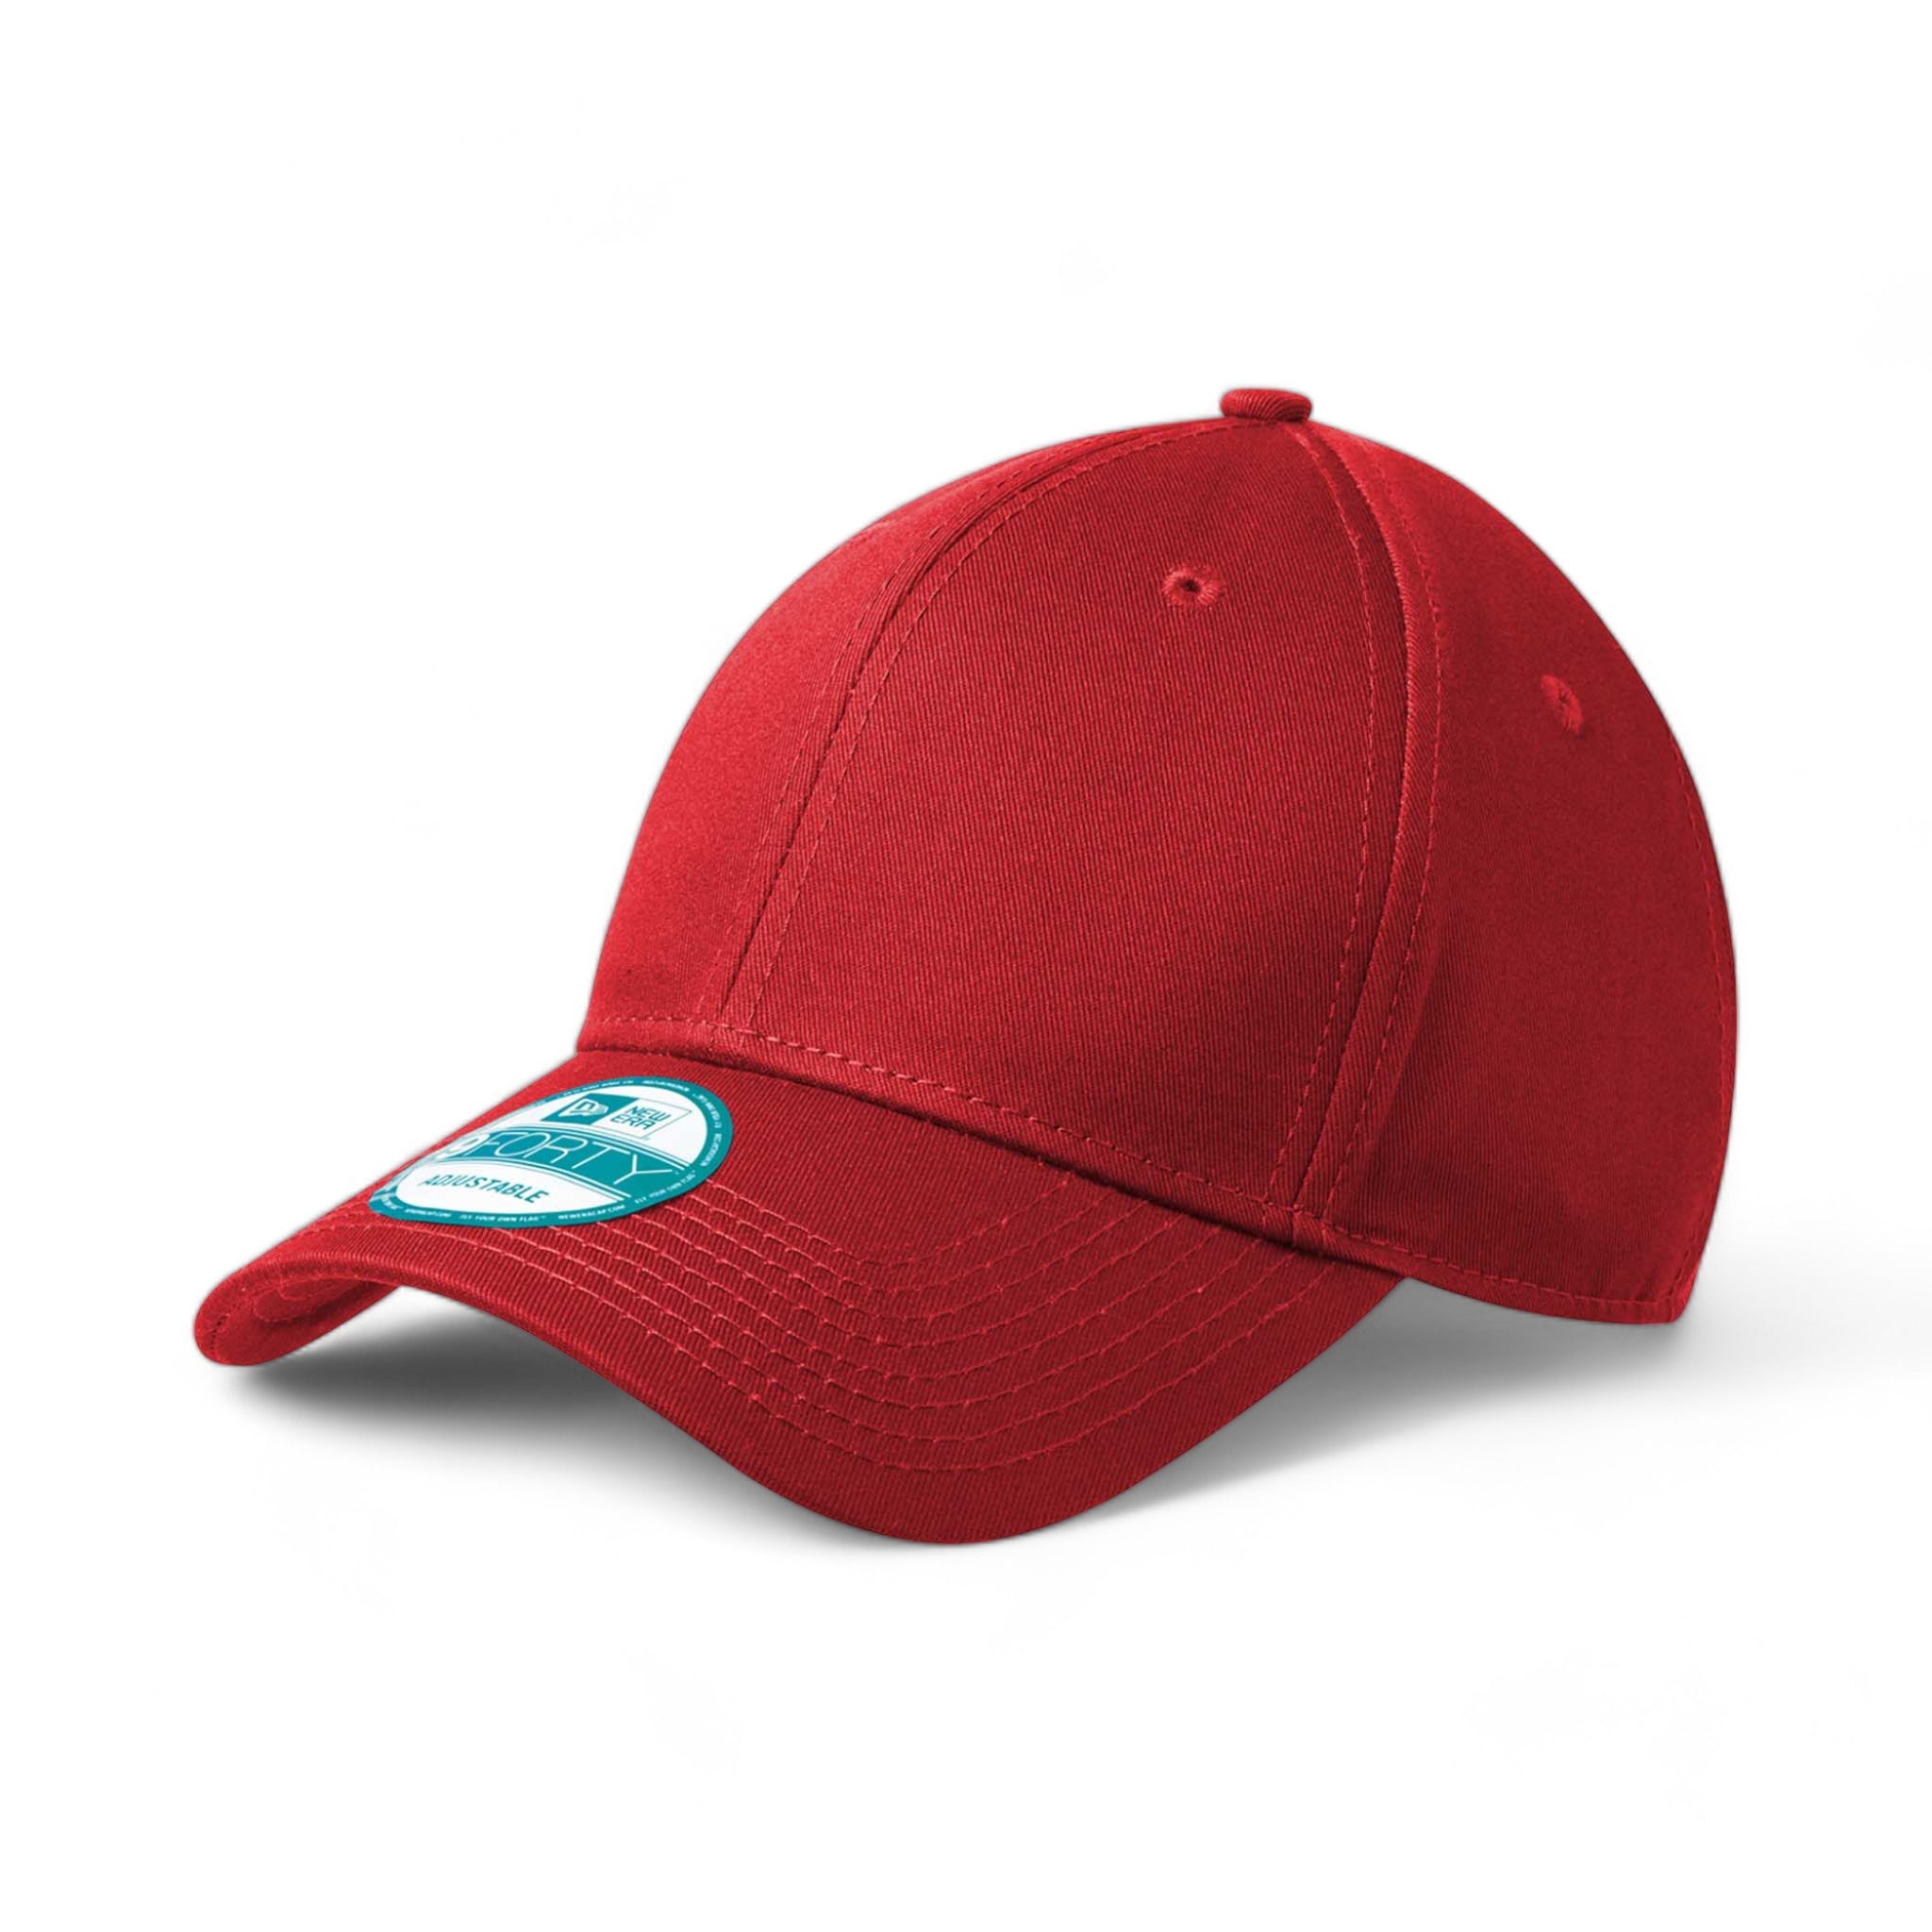 Side view of New Era NE200 custom hat in scarlet red